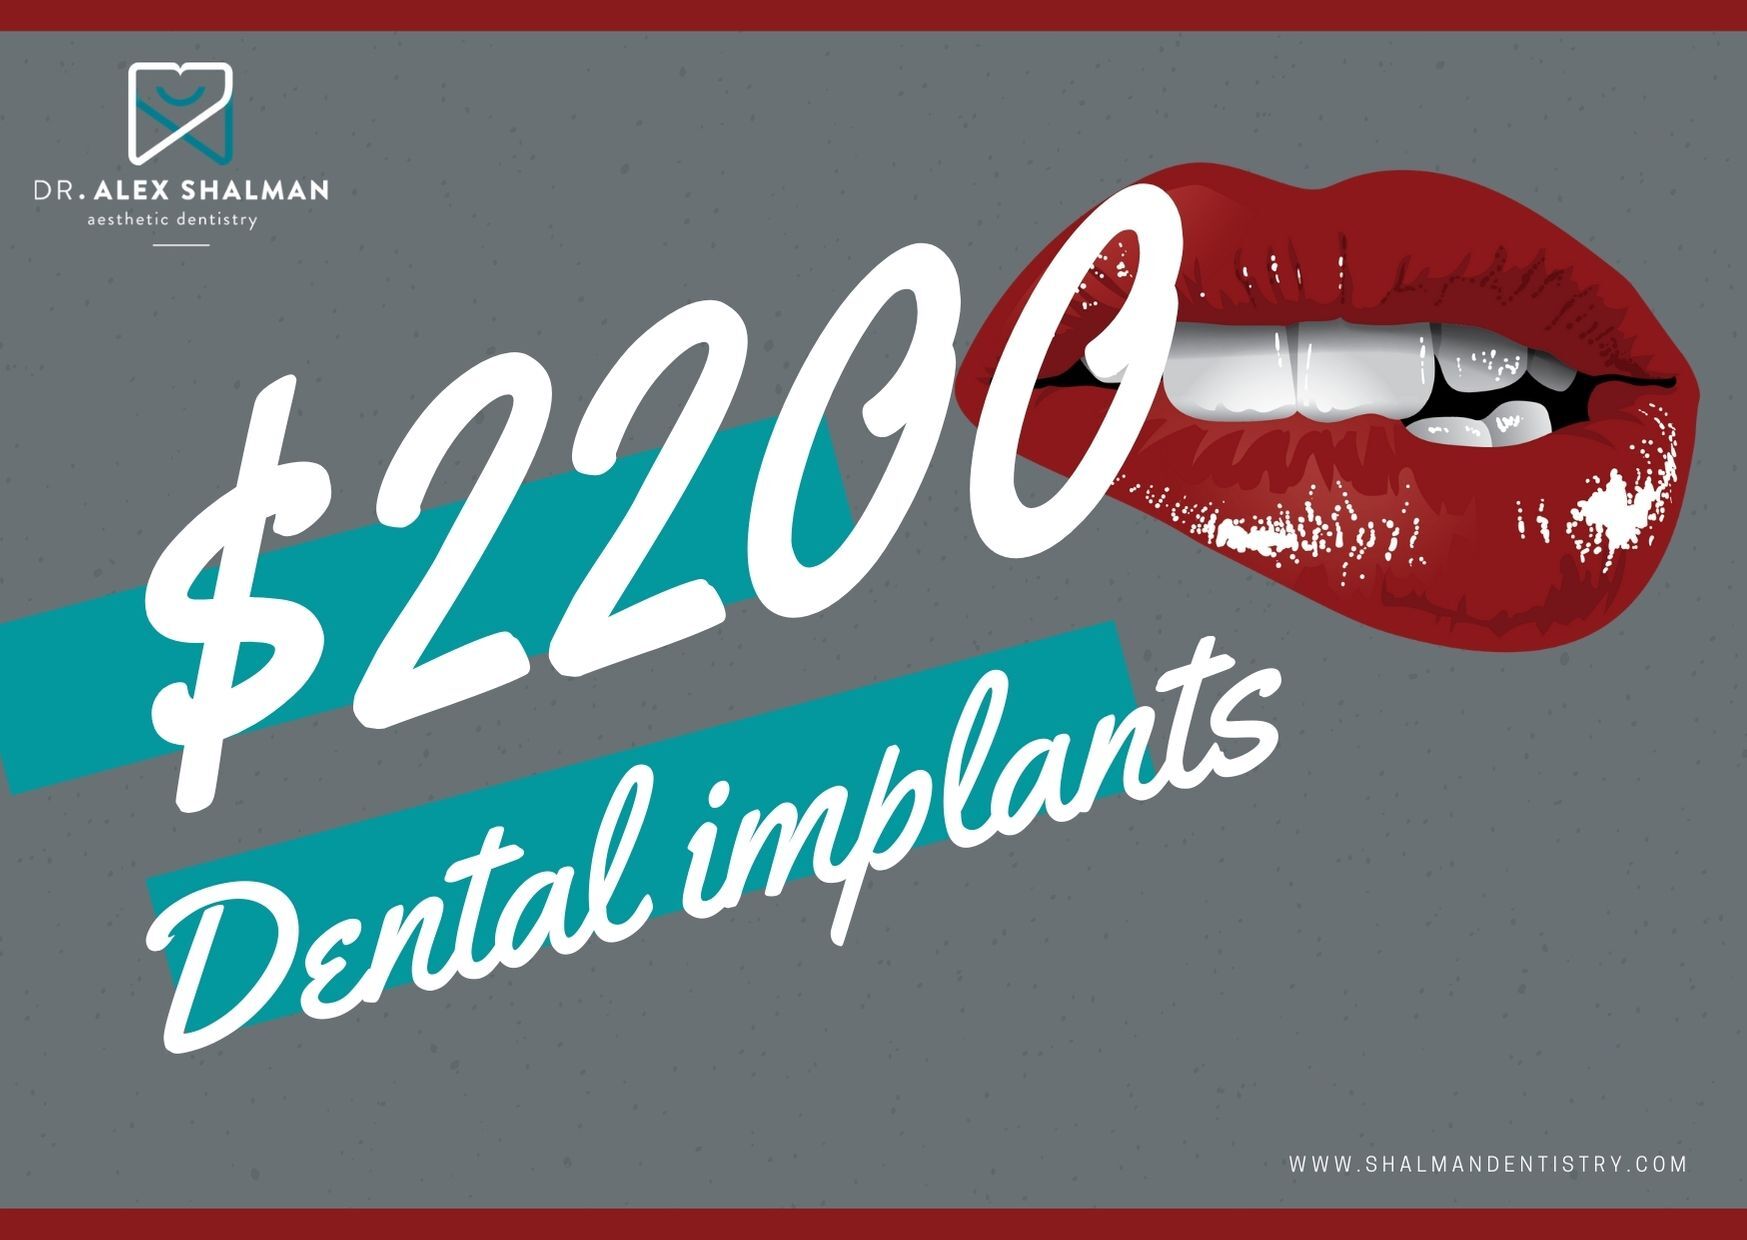 $2200 Dental implants